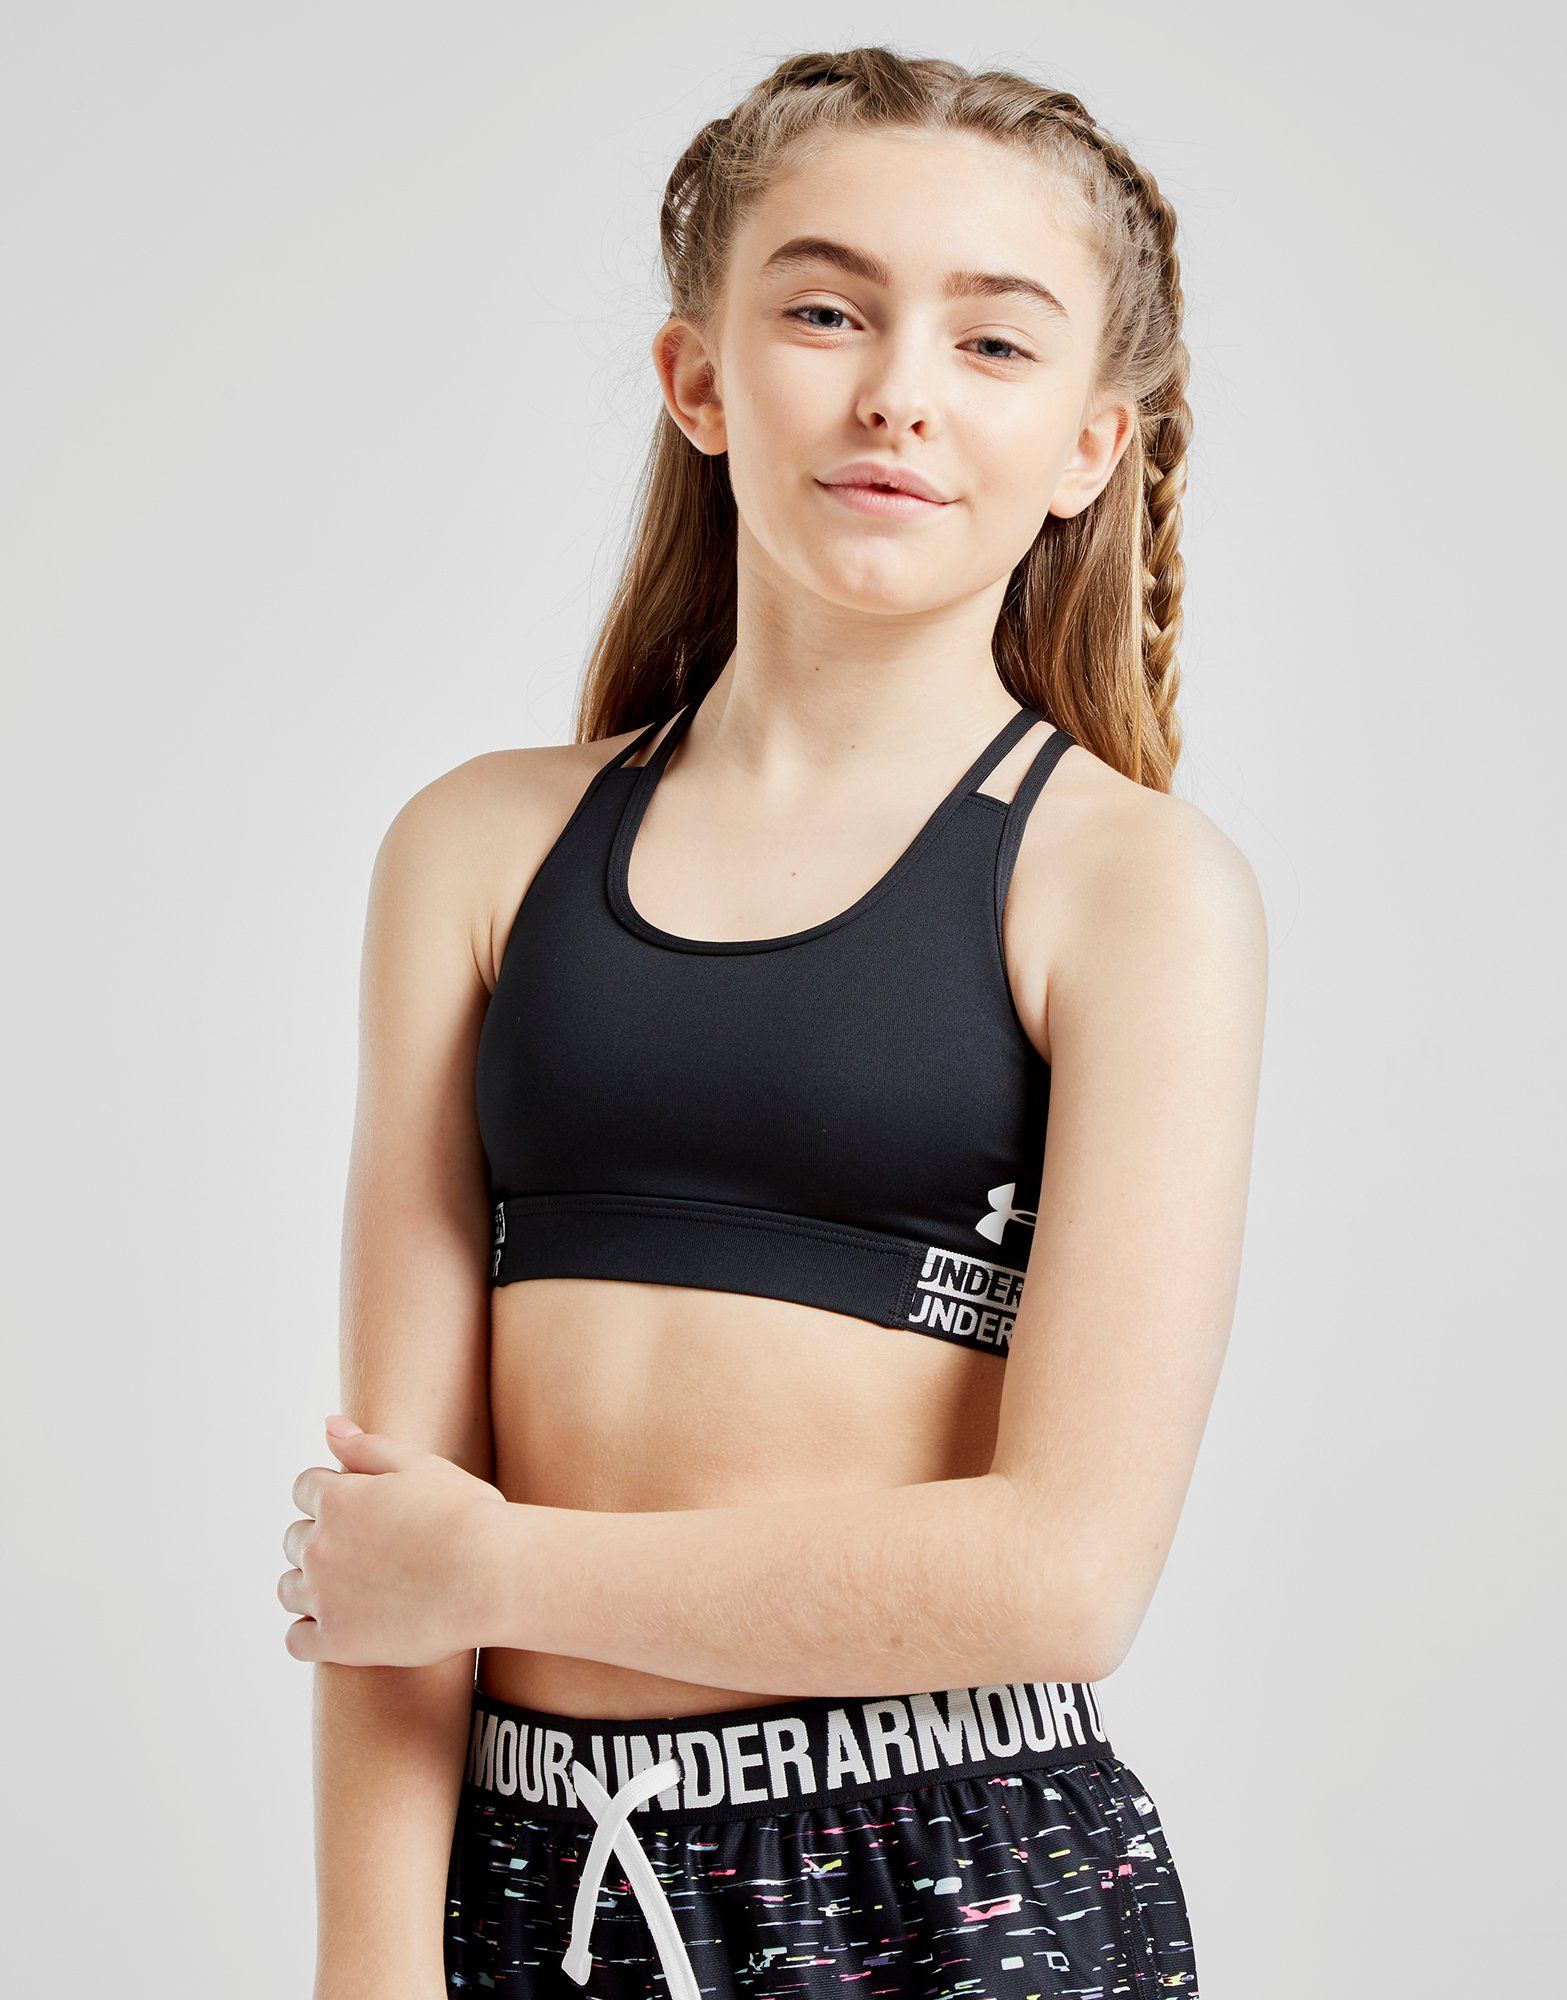 teen girl wearing black sports bra racerback